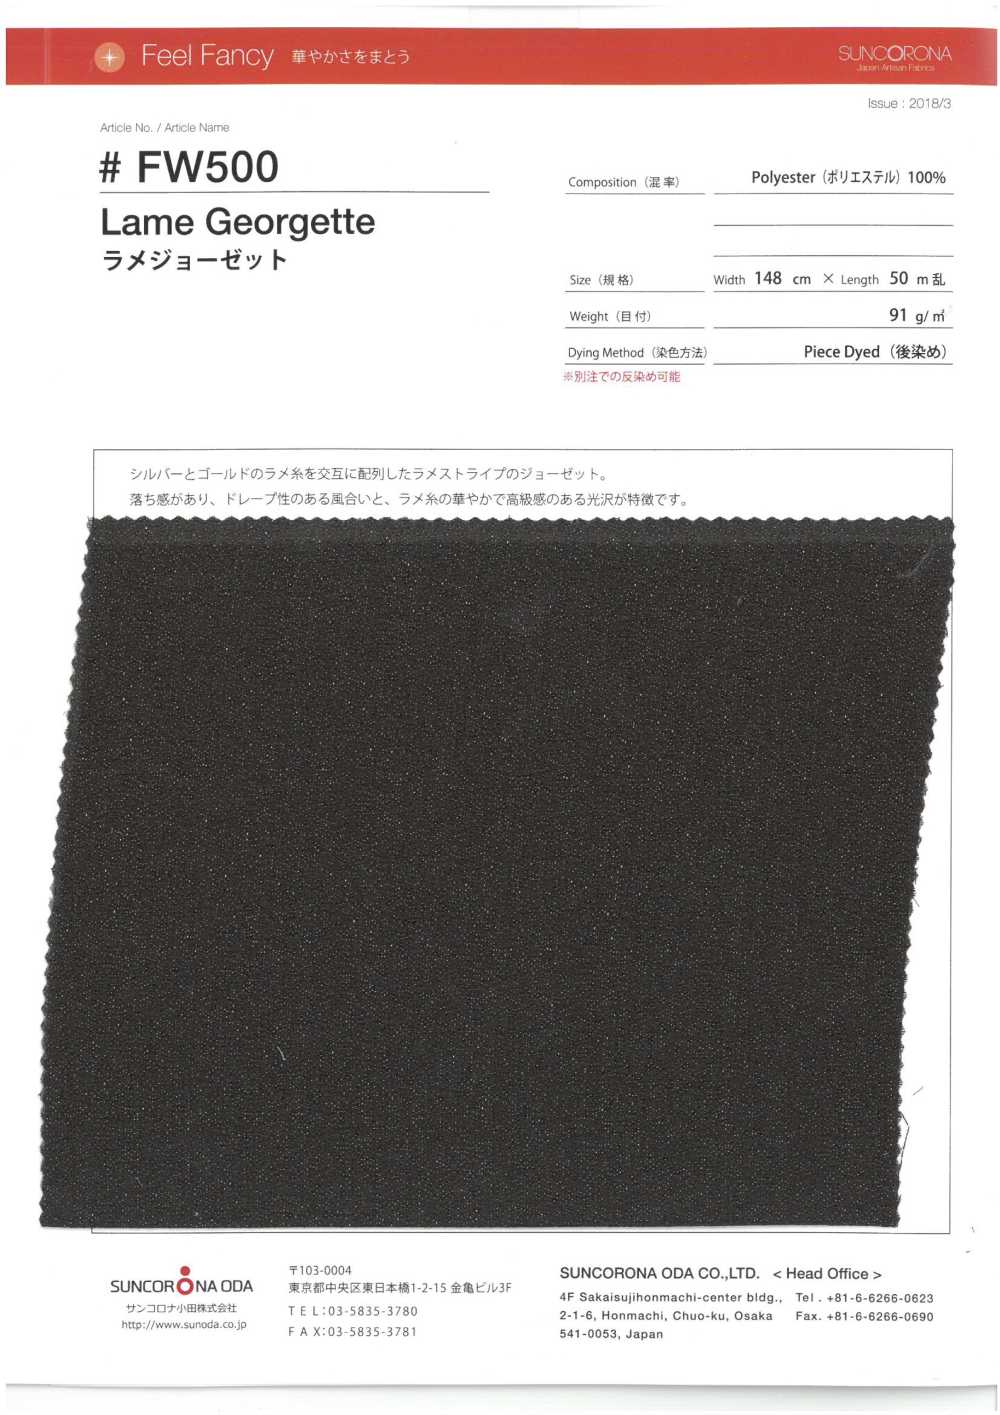 FW500 Lame Georgette[Textile / Fabric] Suncorona Oda